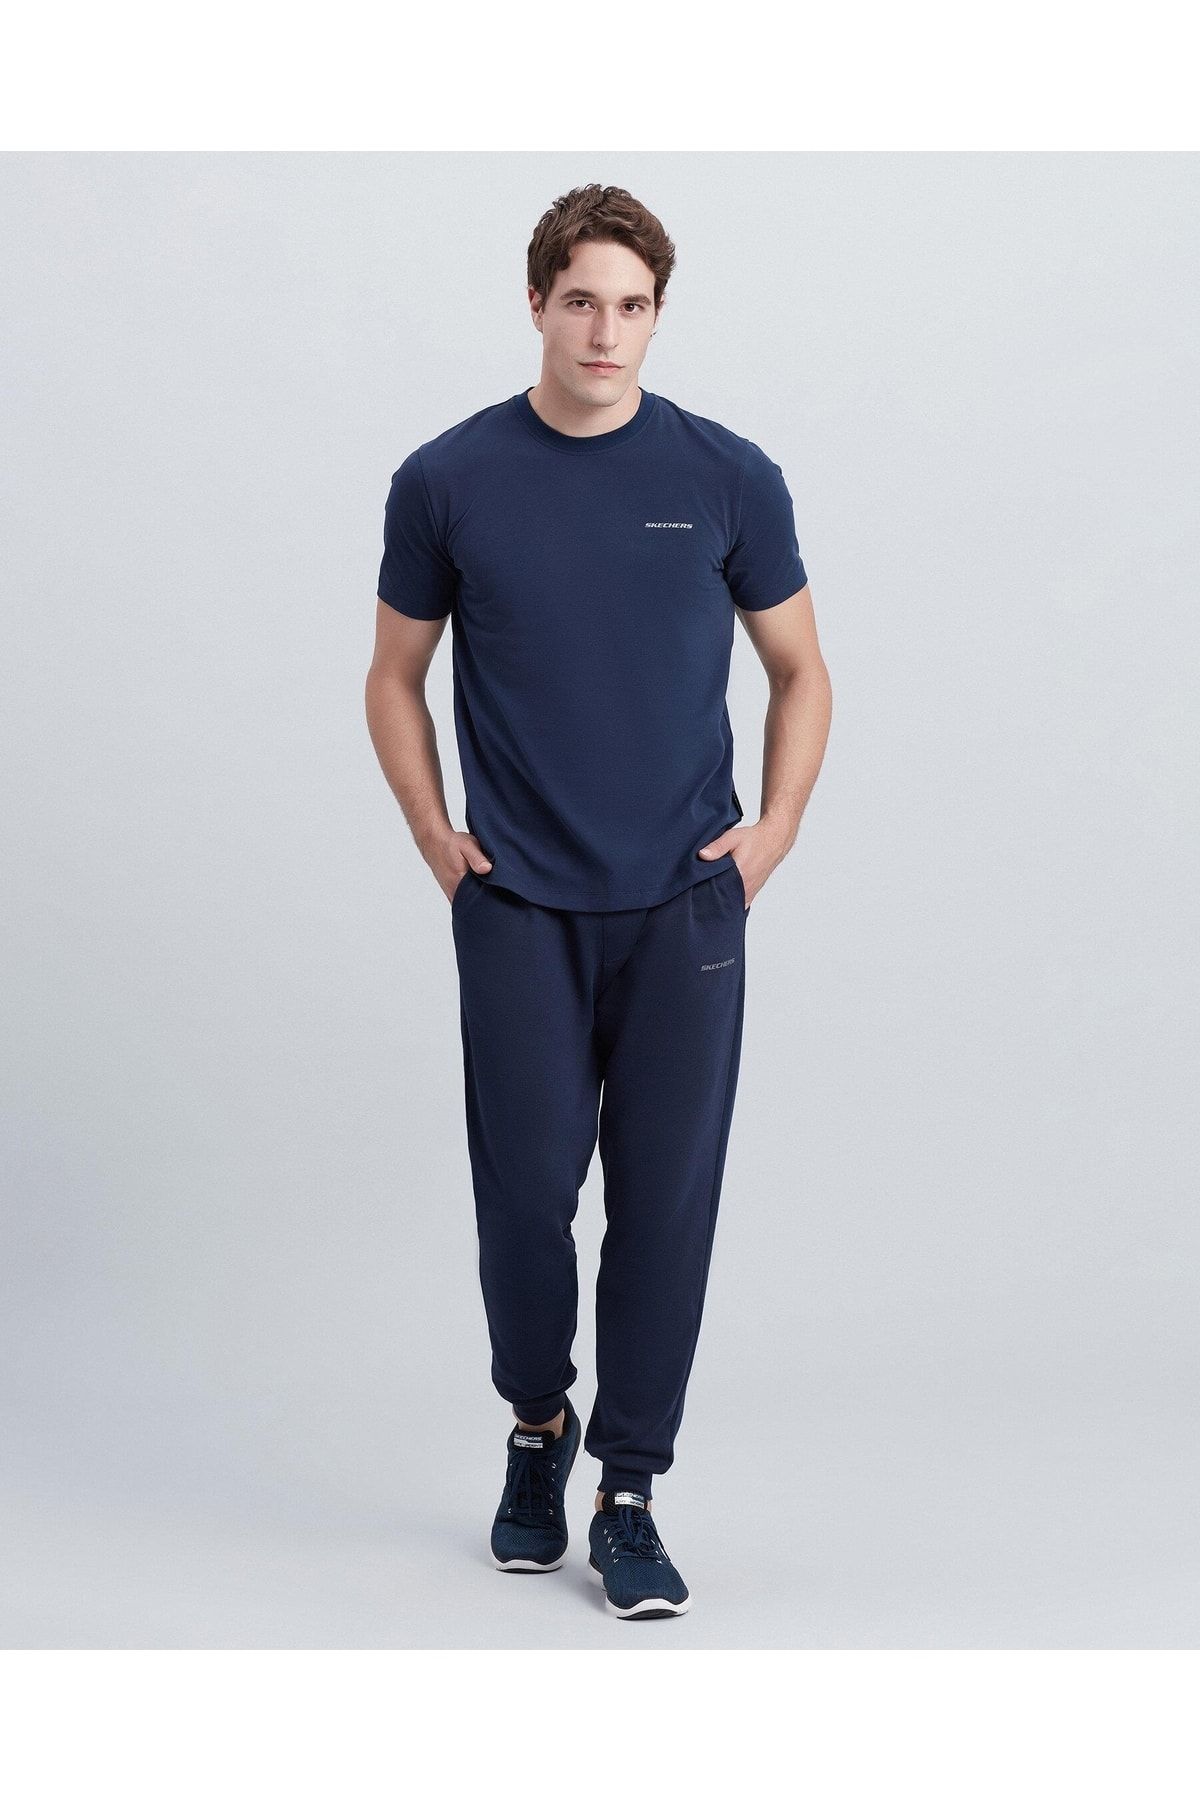 Skechers M New Basics Crew Neck T-Shirt Erkek Lacivert Tshirt